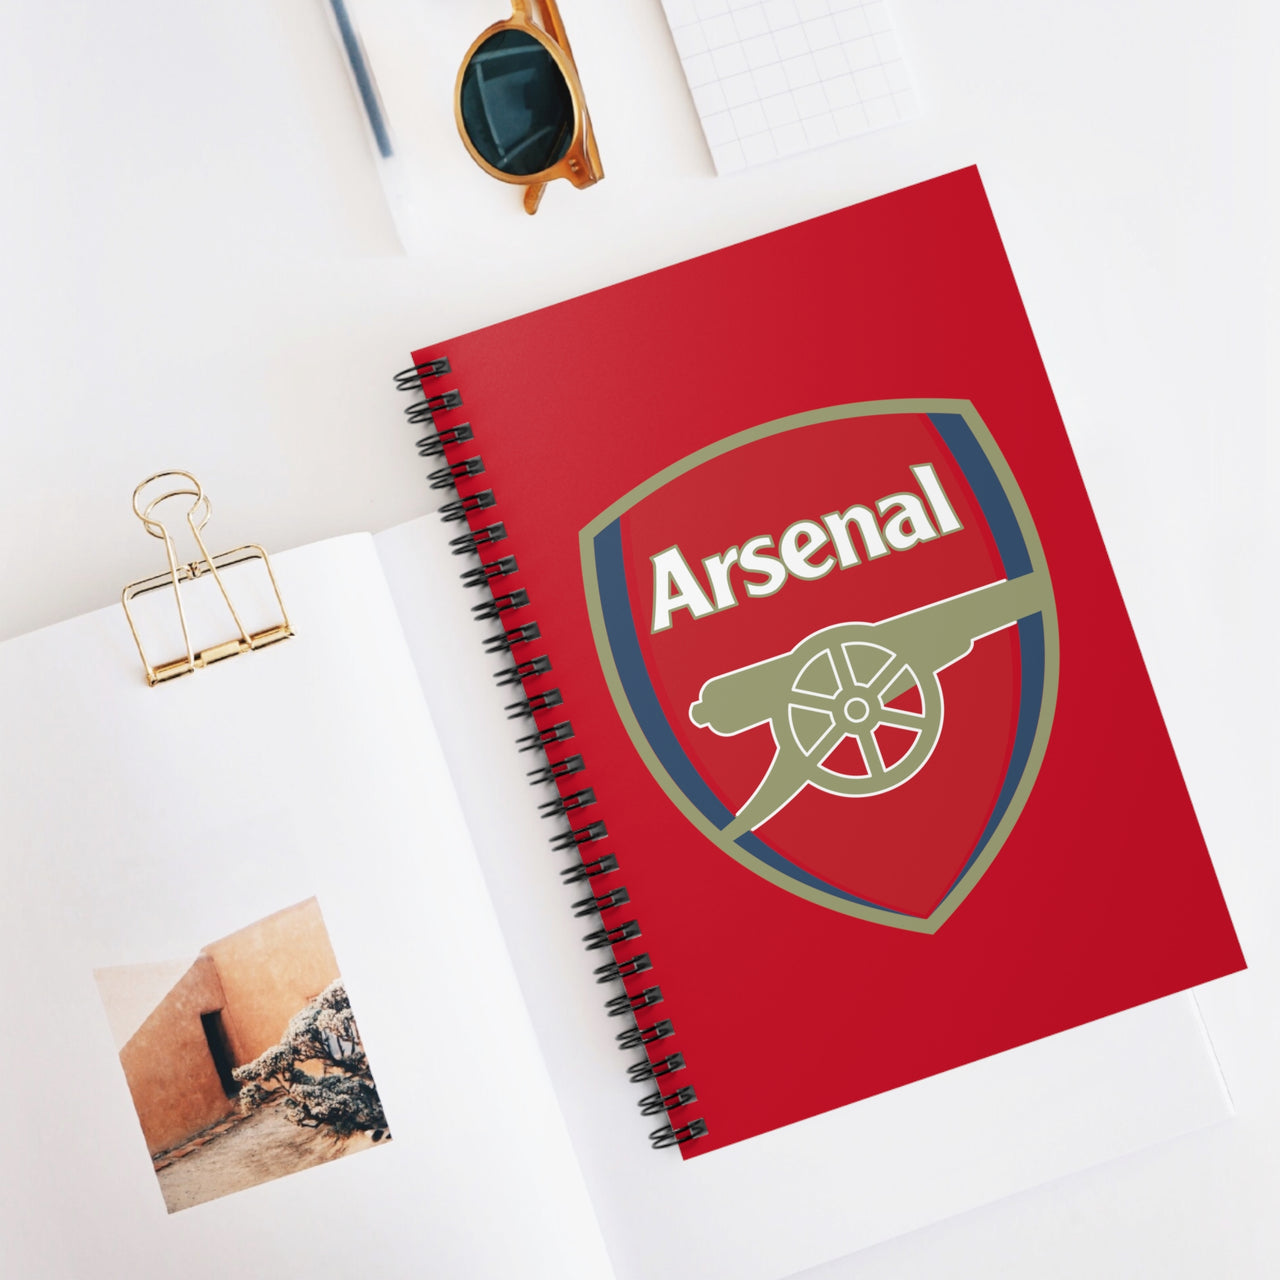 Arsenal Spiral Notebook - Ruled Line